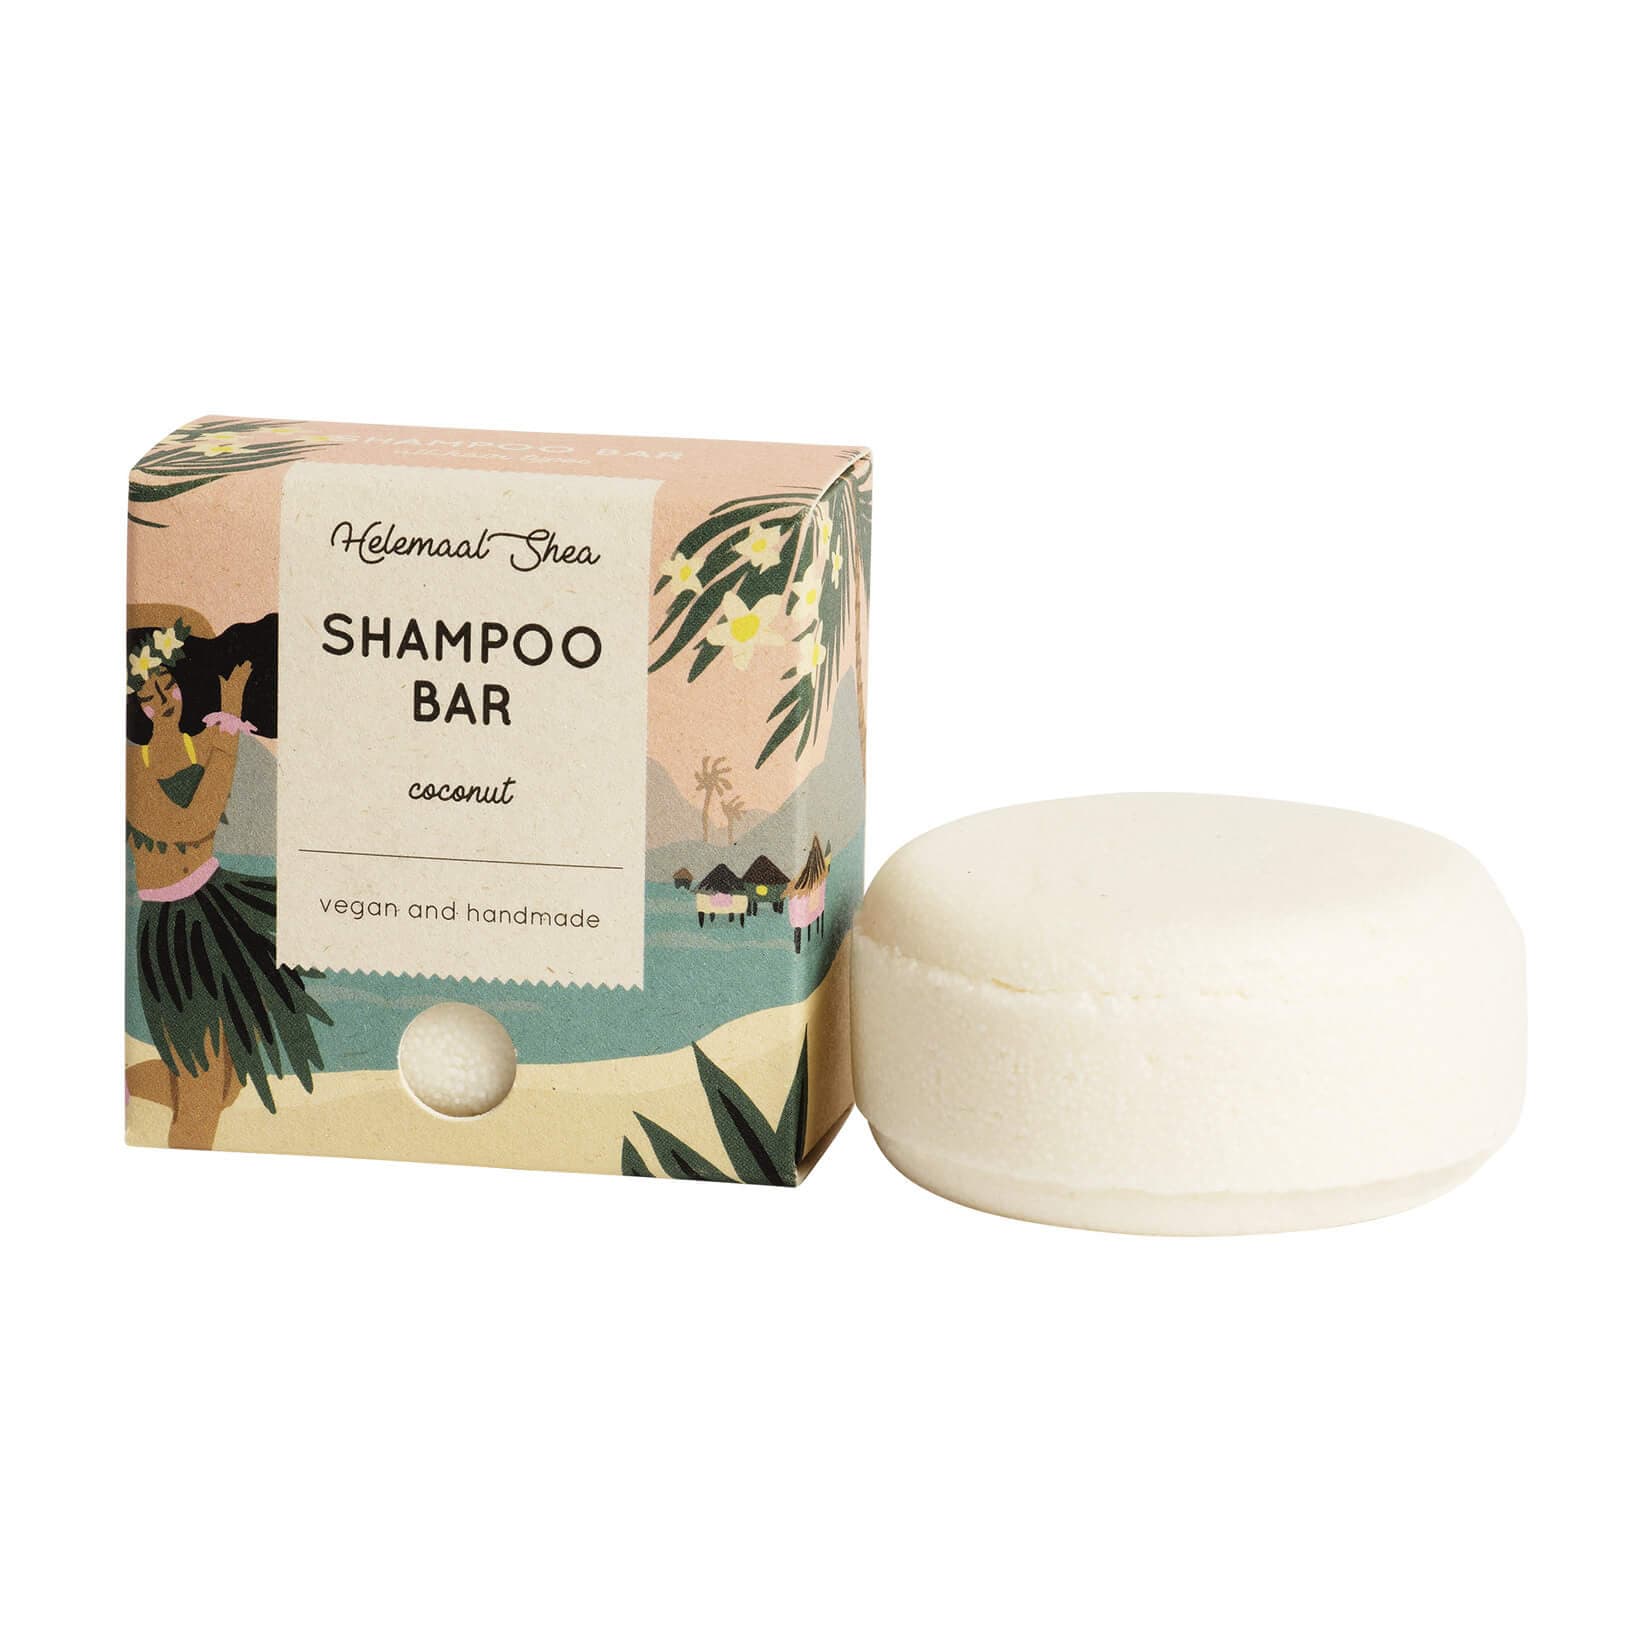 Shampoo Bar - Coconut - All Hair types - Plastic Free AmsterdamShampoo